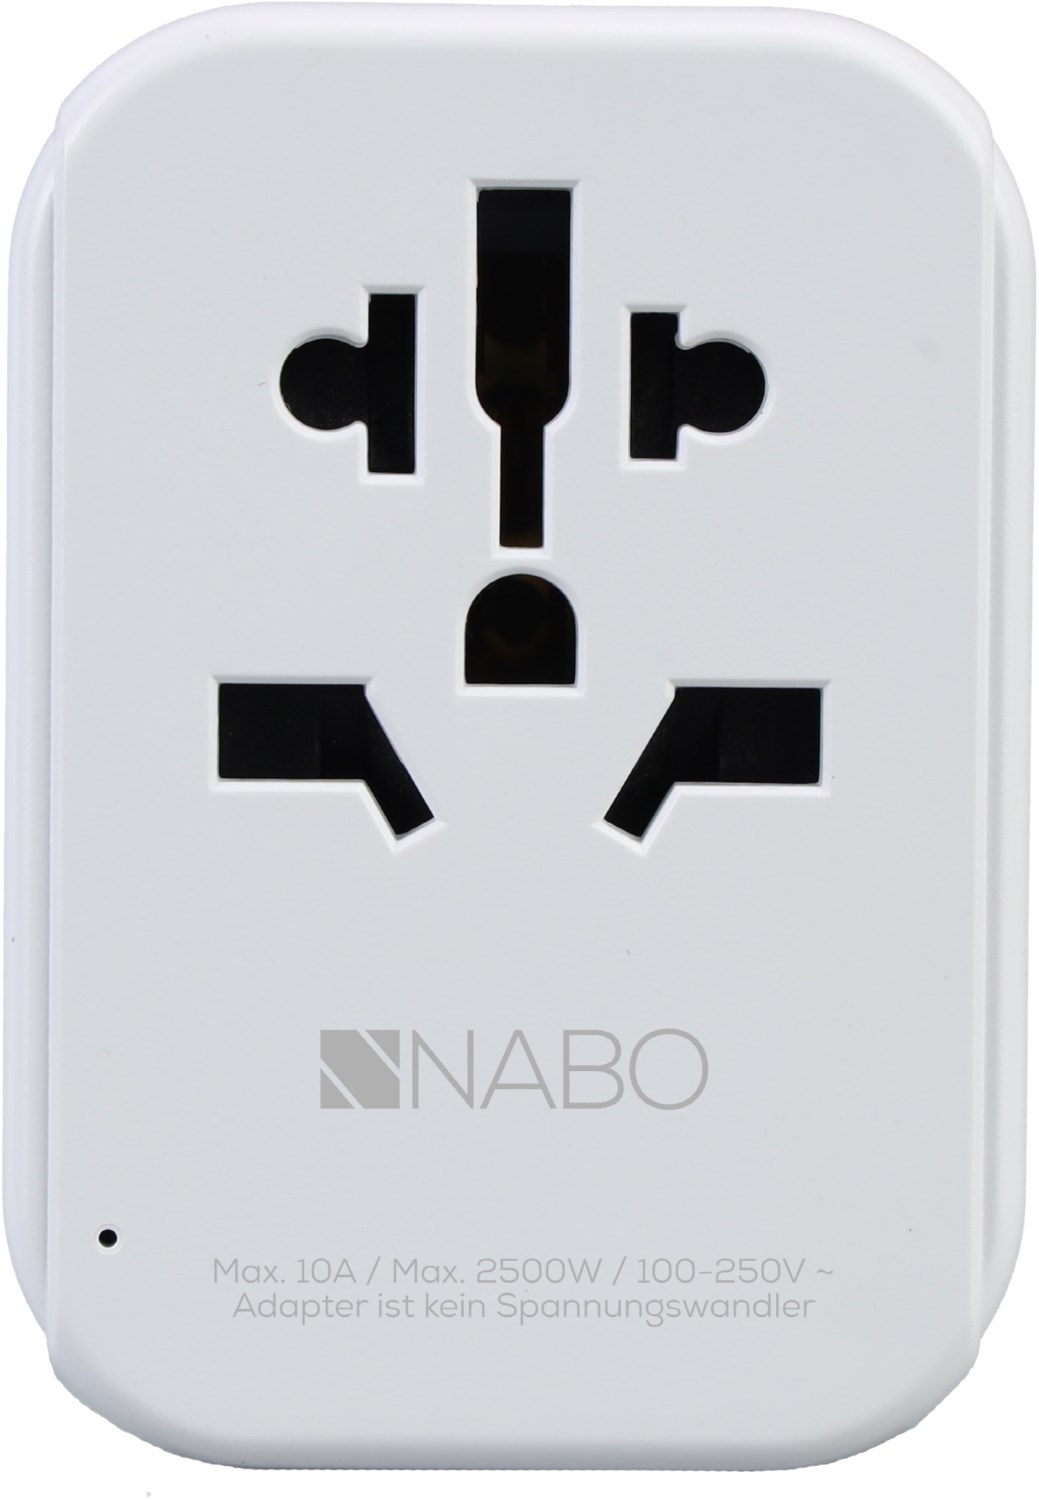 NABO RA 200 - Produktbild